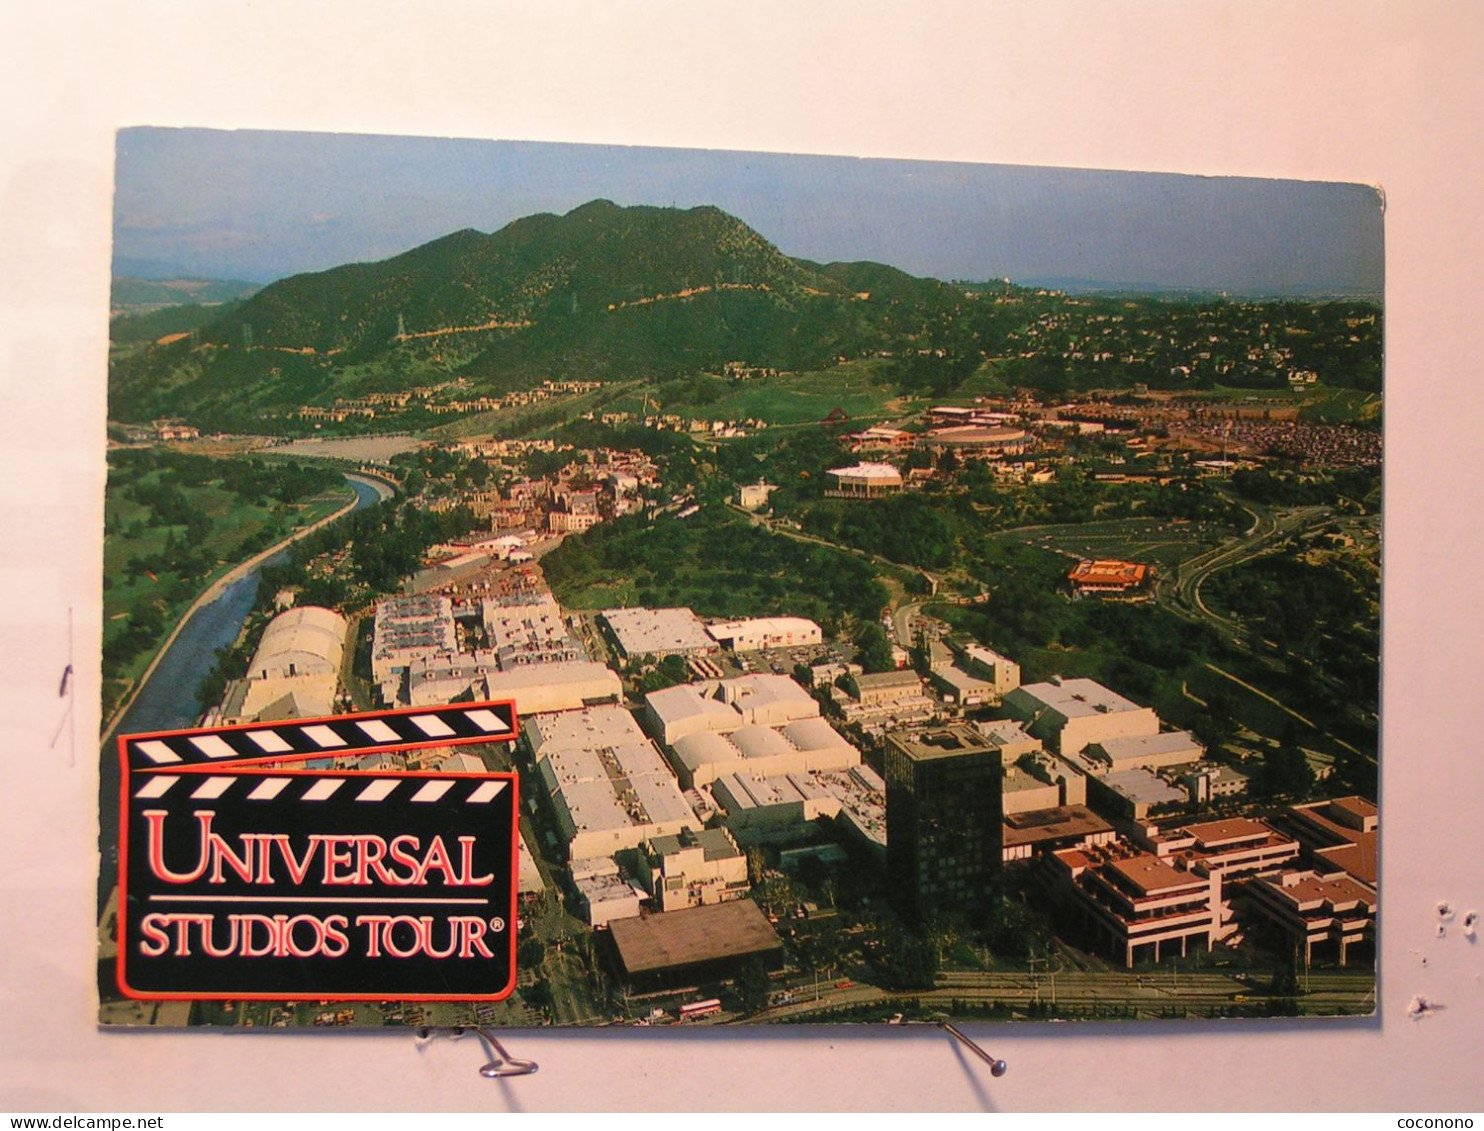 Los Angeles - Universal Studios Tour - Los Angeles